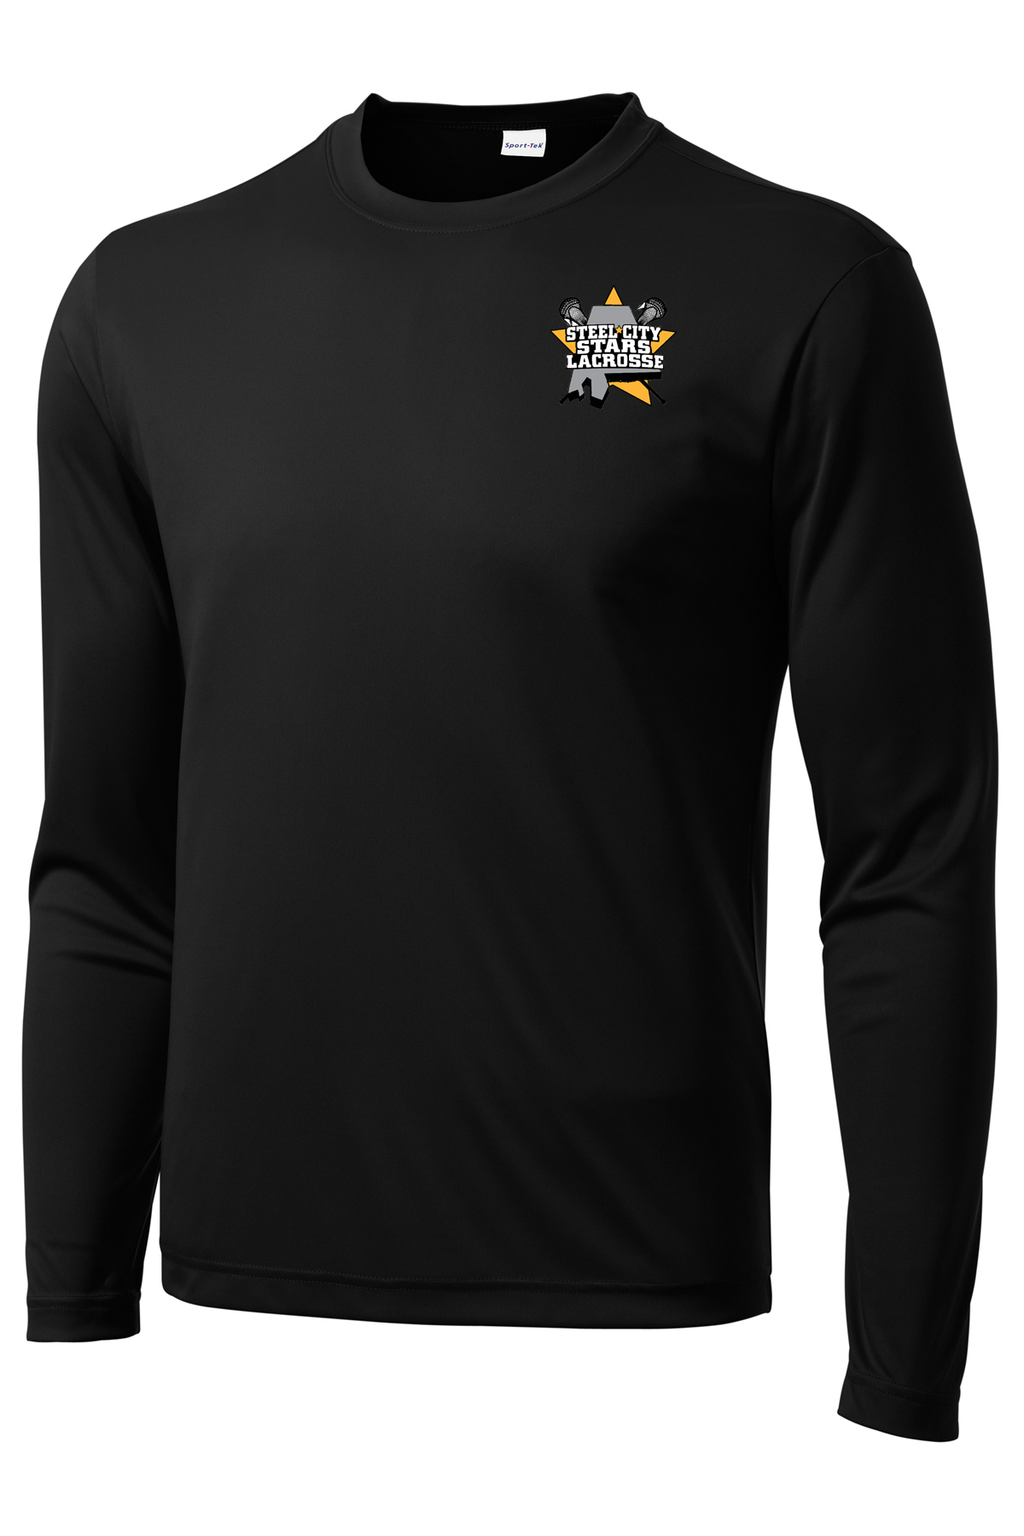 Stars Lacrosse Long Sleeve Performance Shirt